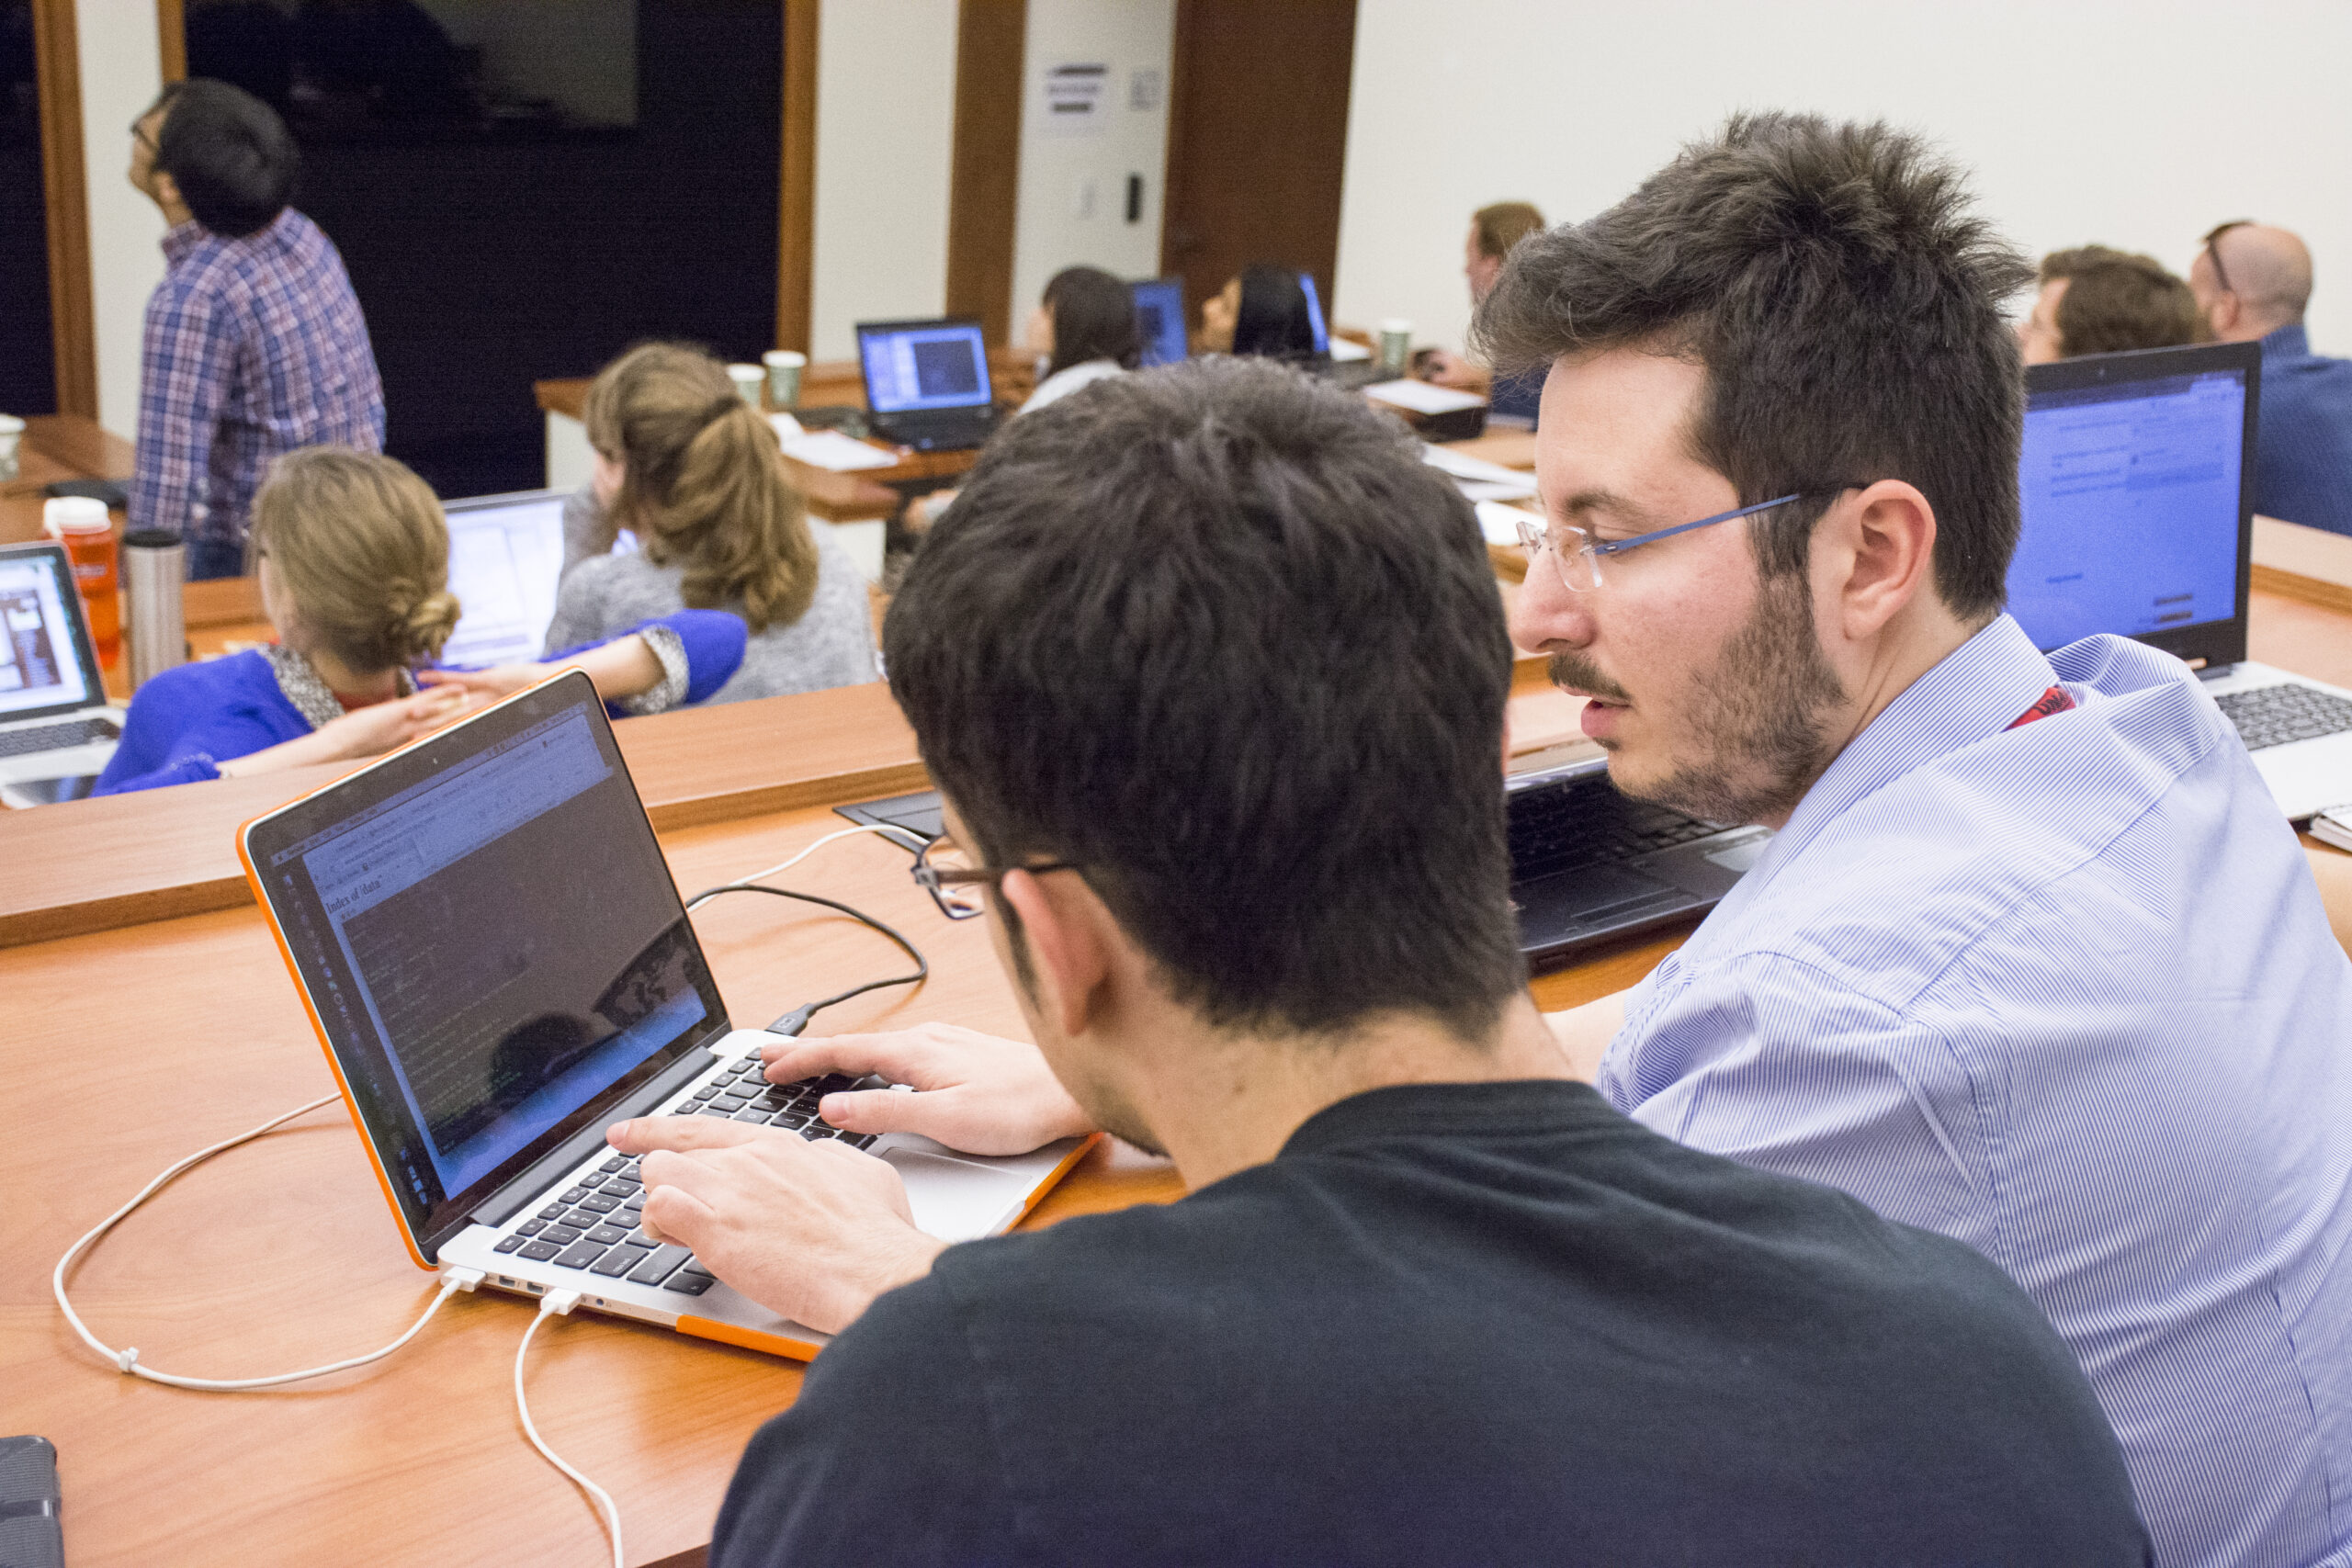 short course participants working on laptops